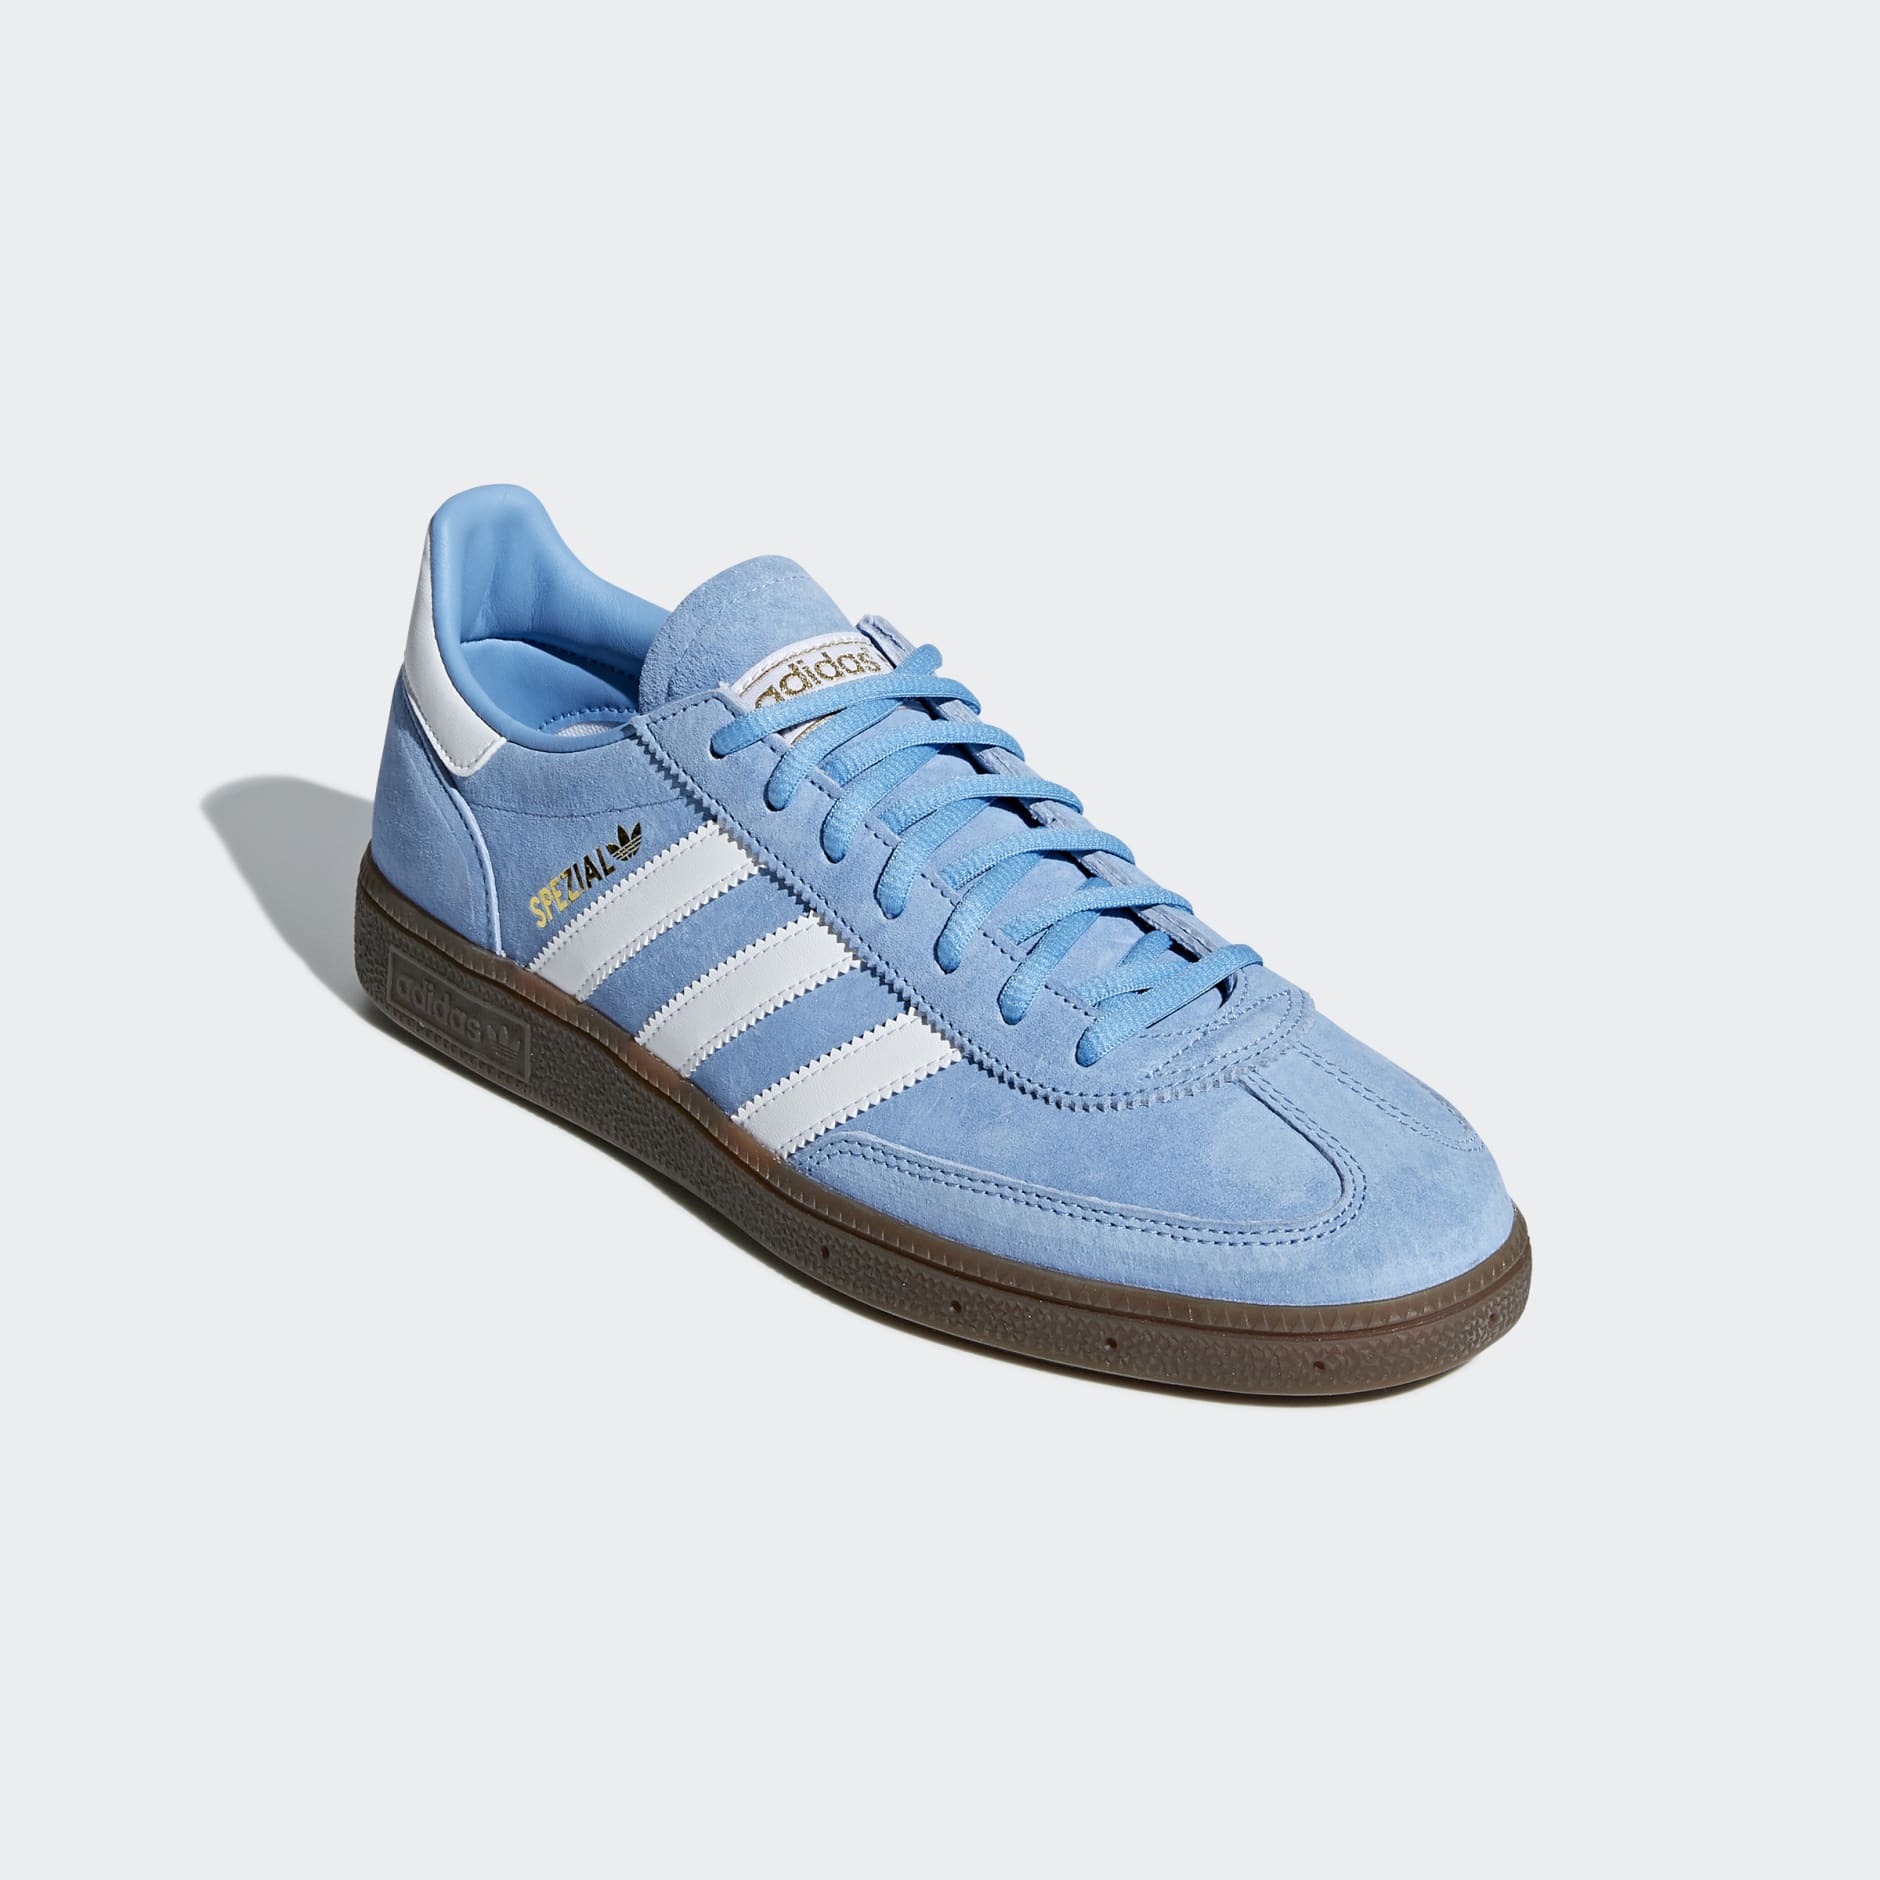 Men's Shoes - Handball Spezial Shoes - Blue adidas Oman